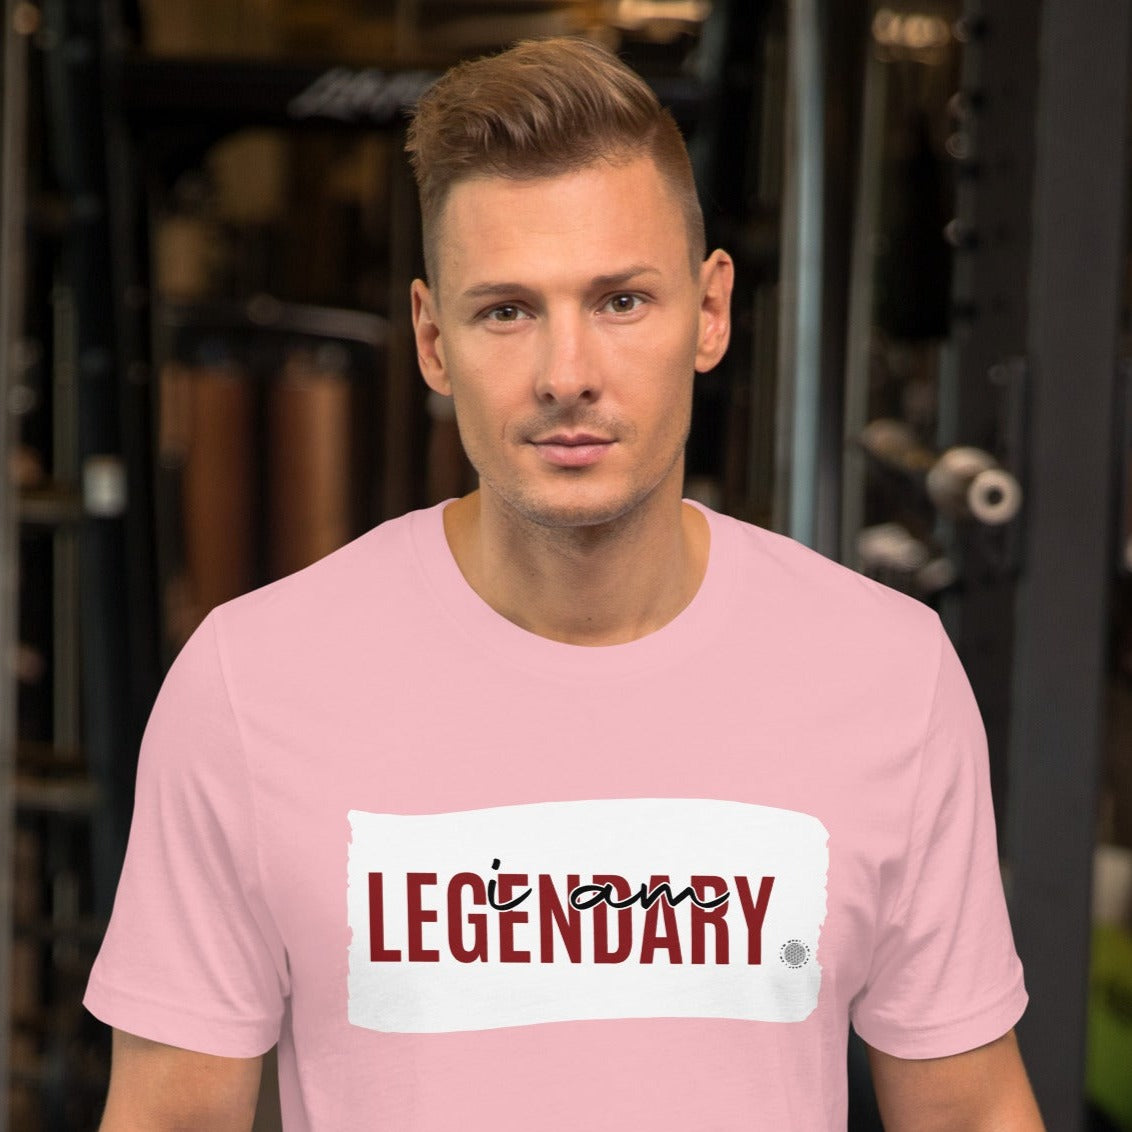 I Am Legendary Adult Unisex T-Shirt pink